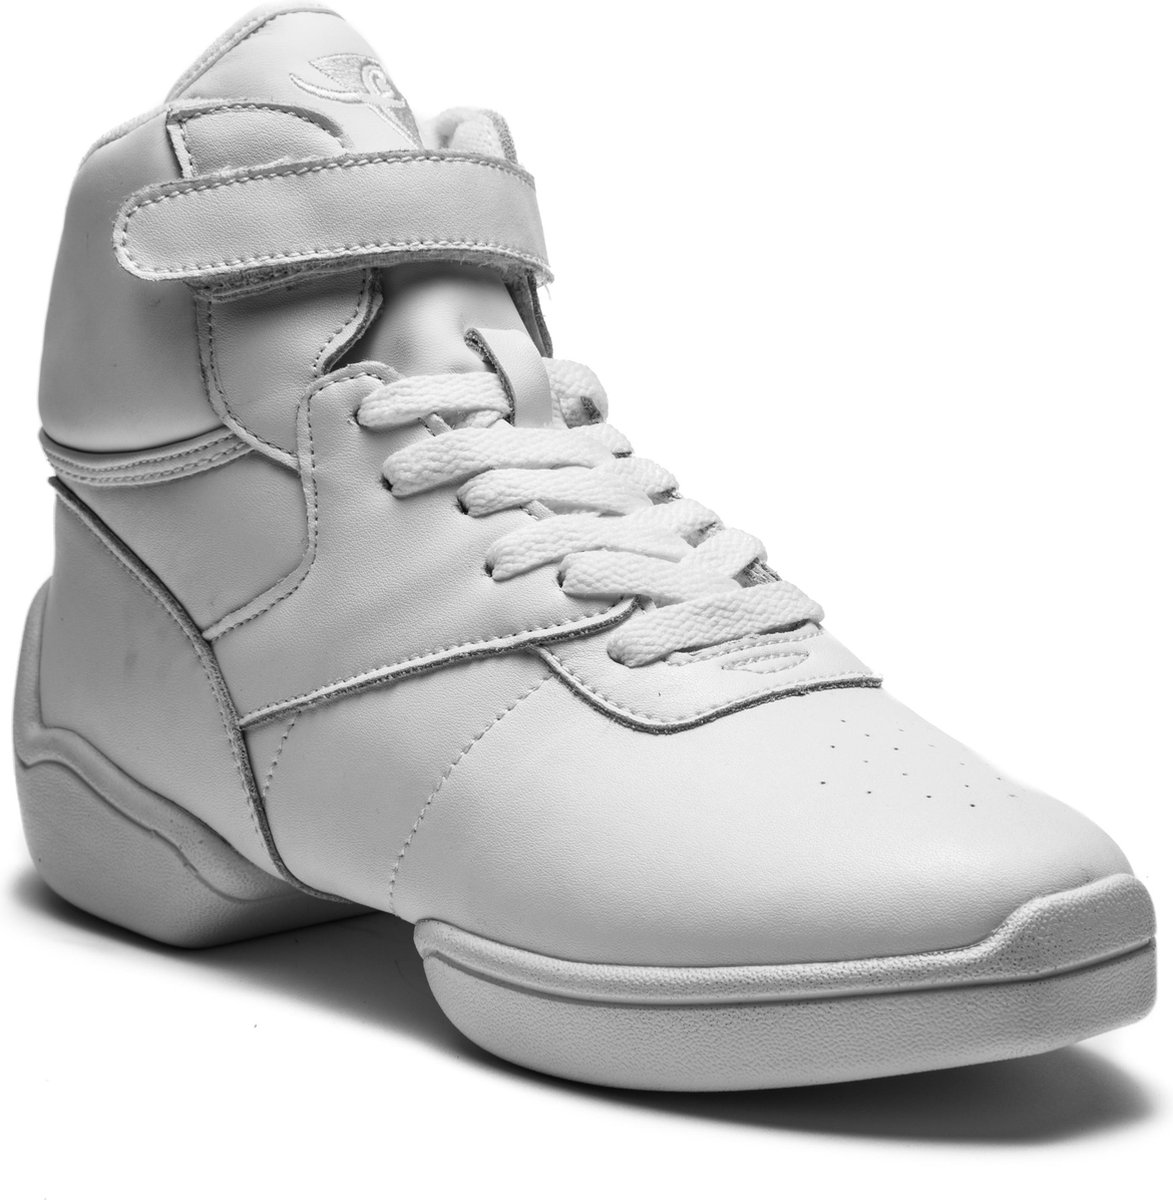 Rumpf 1500 High Top Sneaker Leather upper white Jazz Street Hip Hop wit Maat 44, UK 9.5